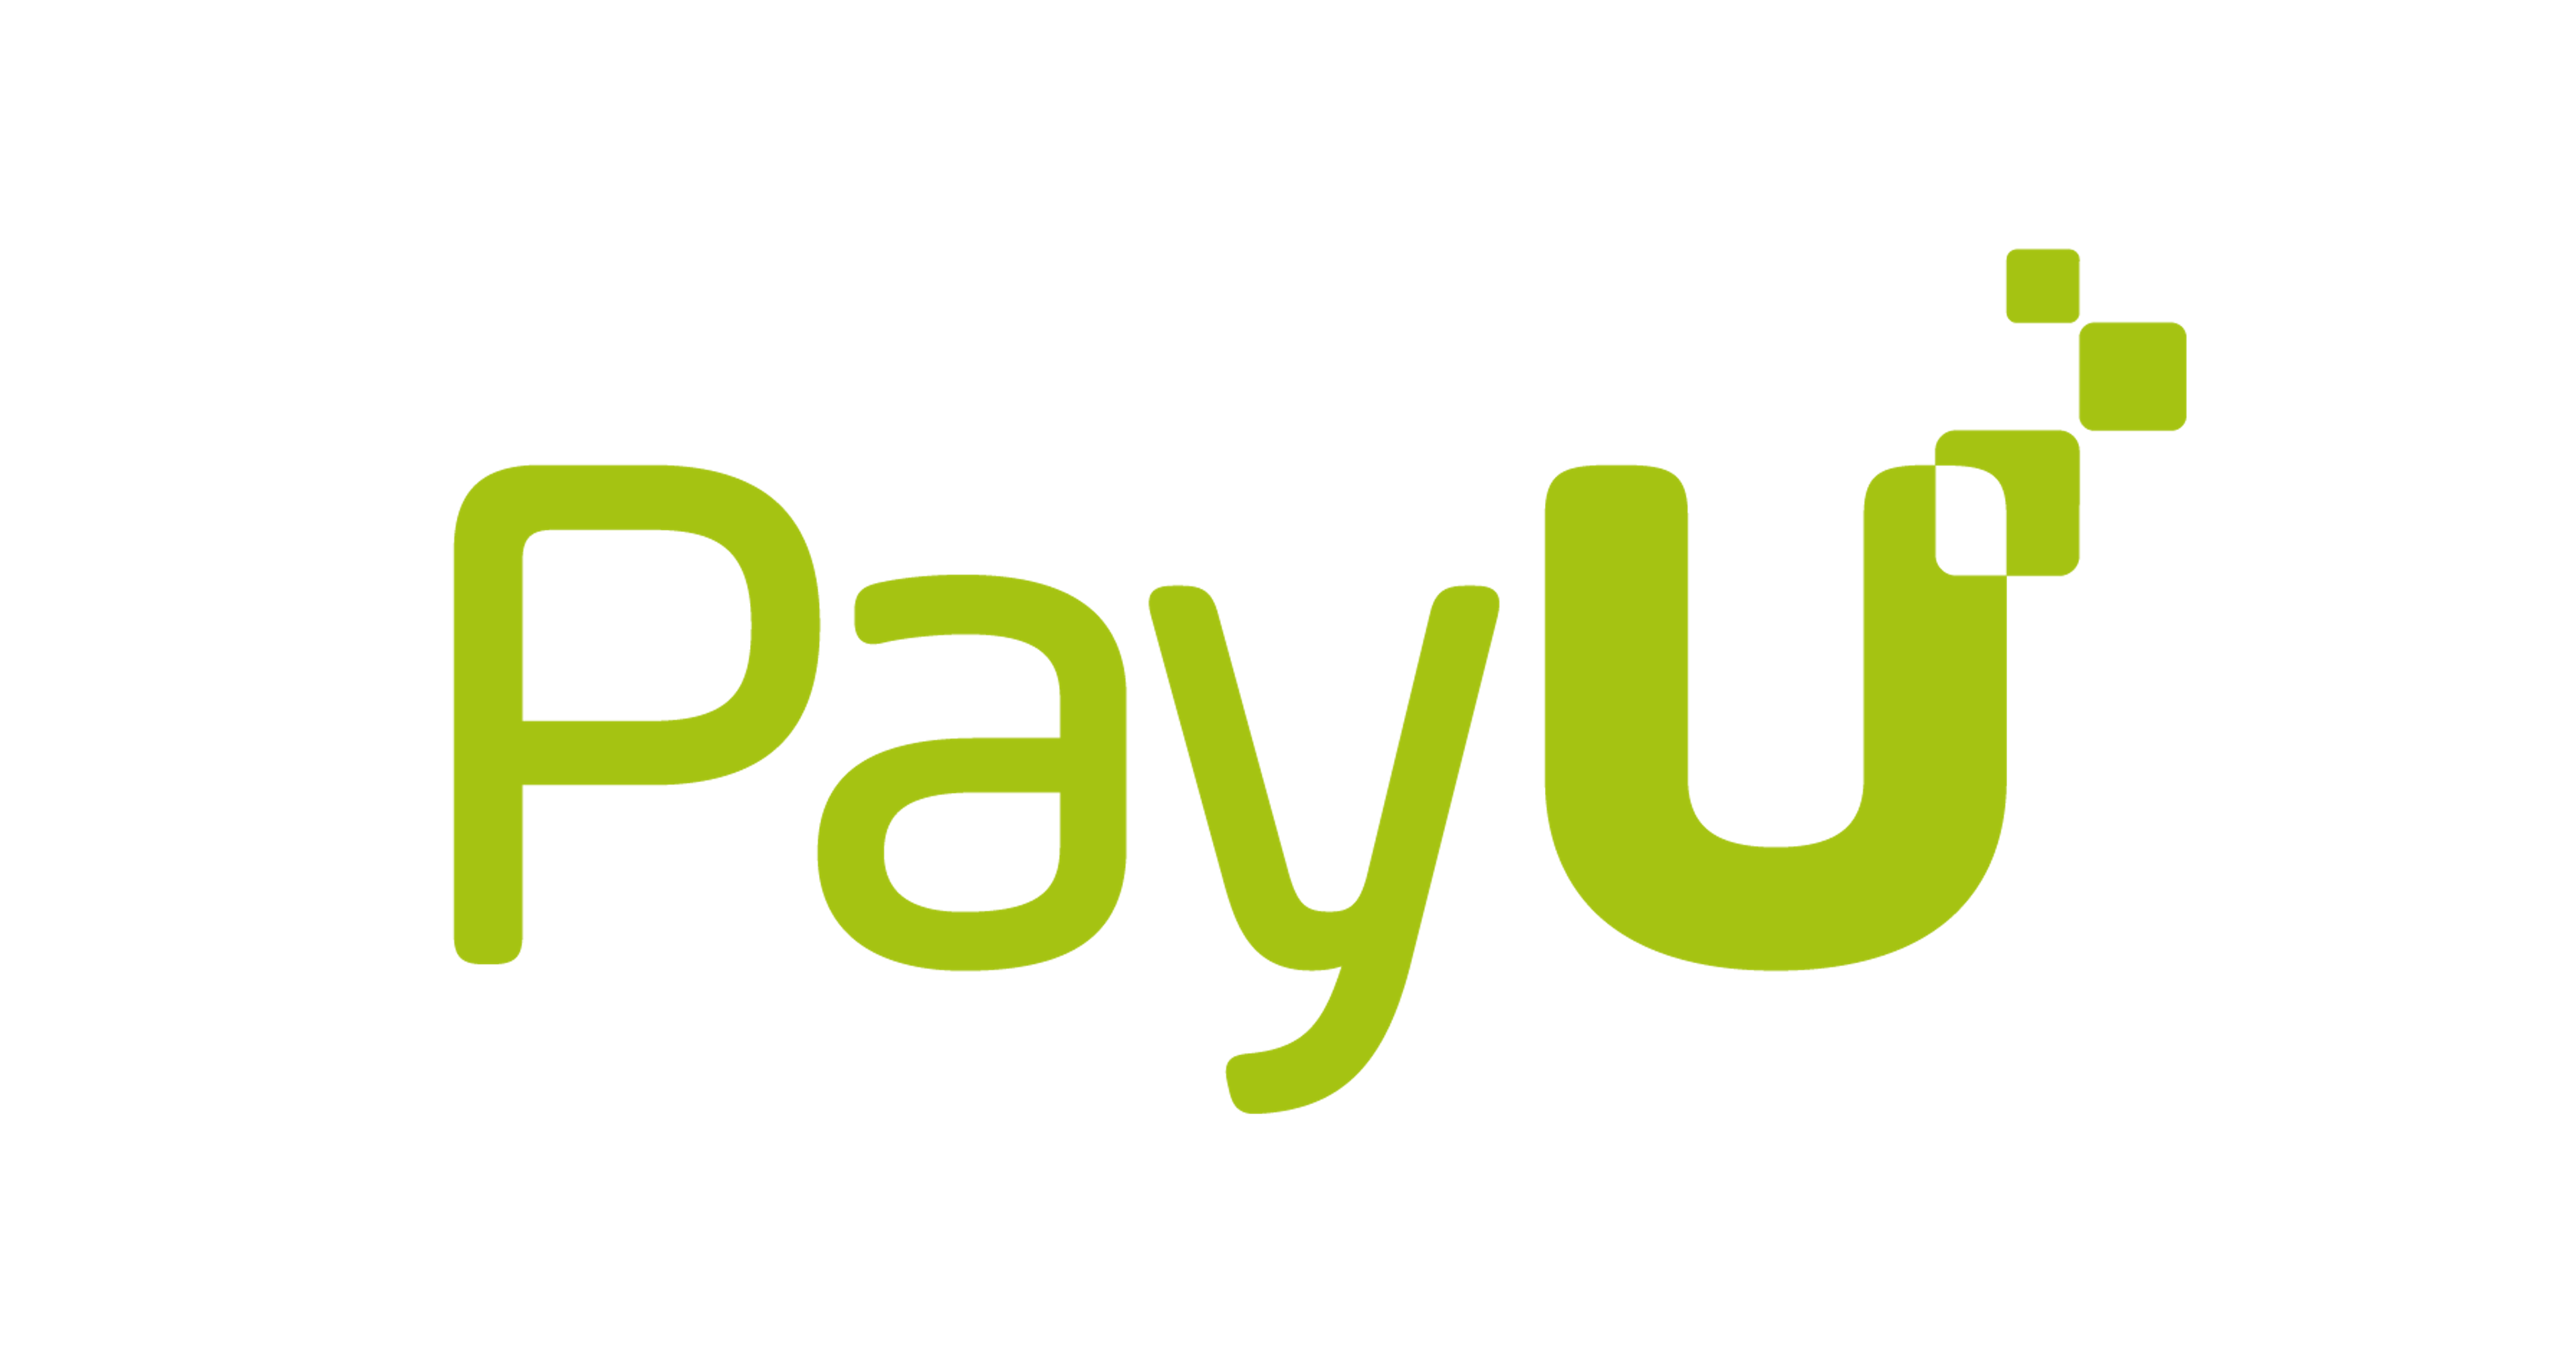 PayU Logo